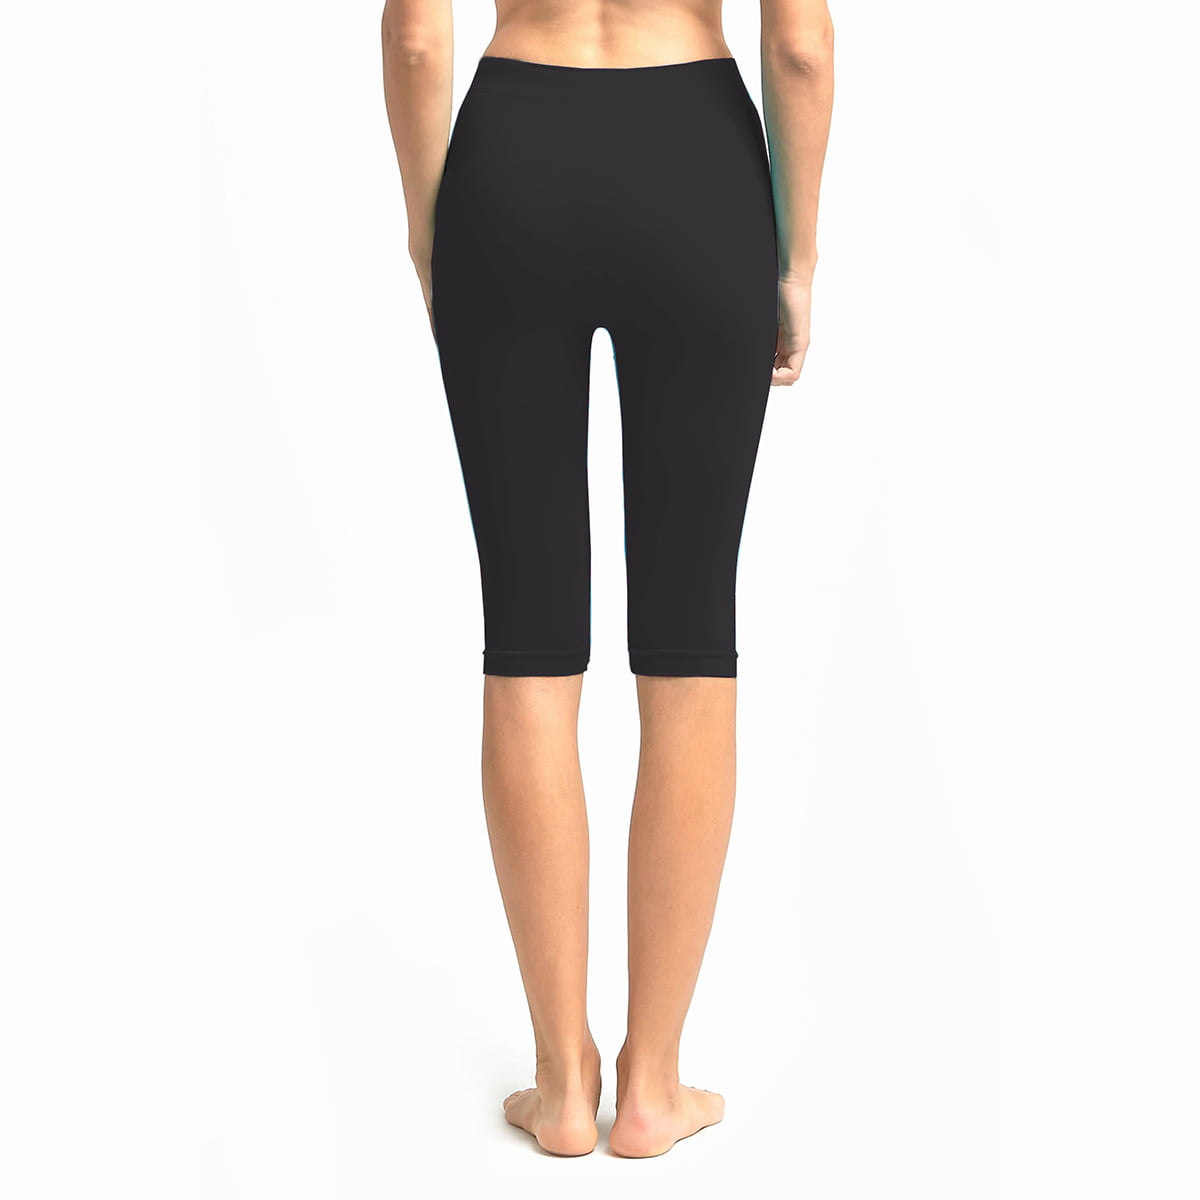 DailyWear Womens Solid Knee Length Short Yoga Cotton Leggings Black, 3Xlarge